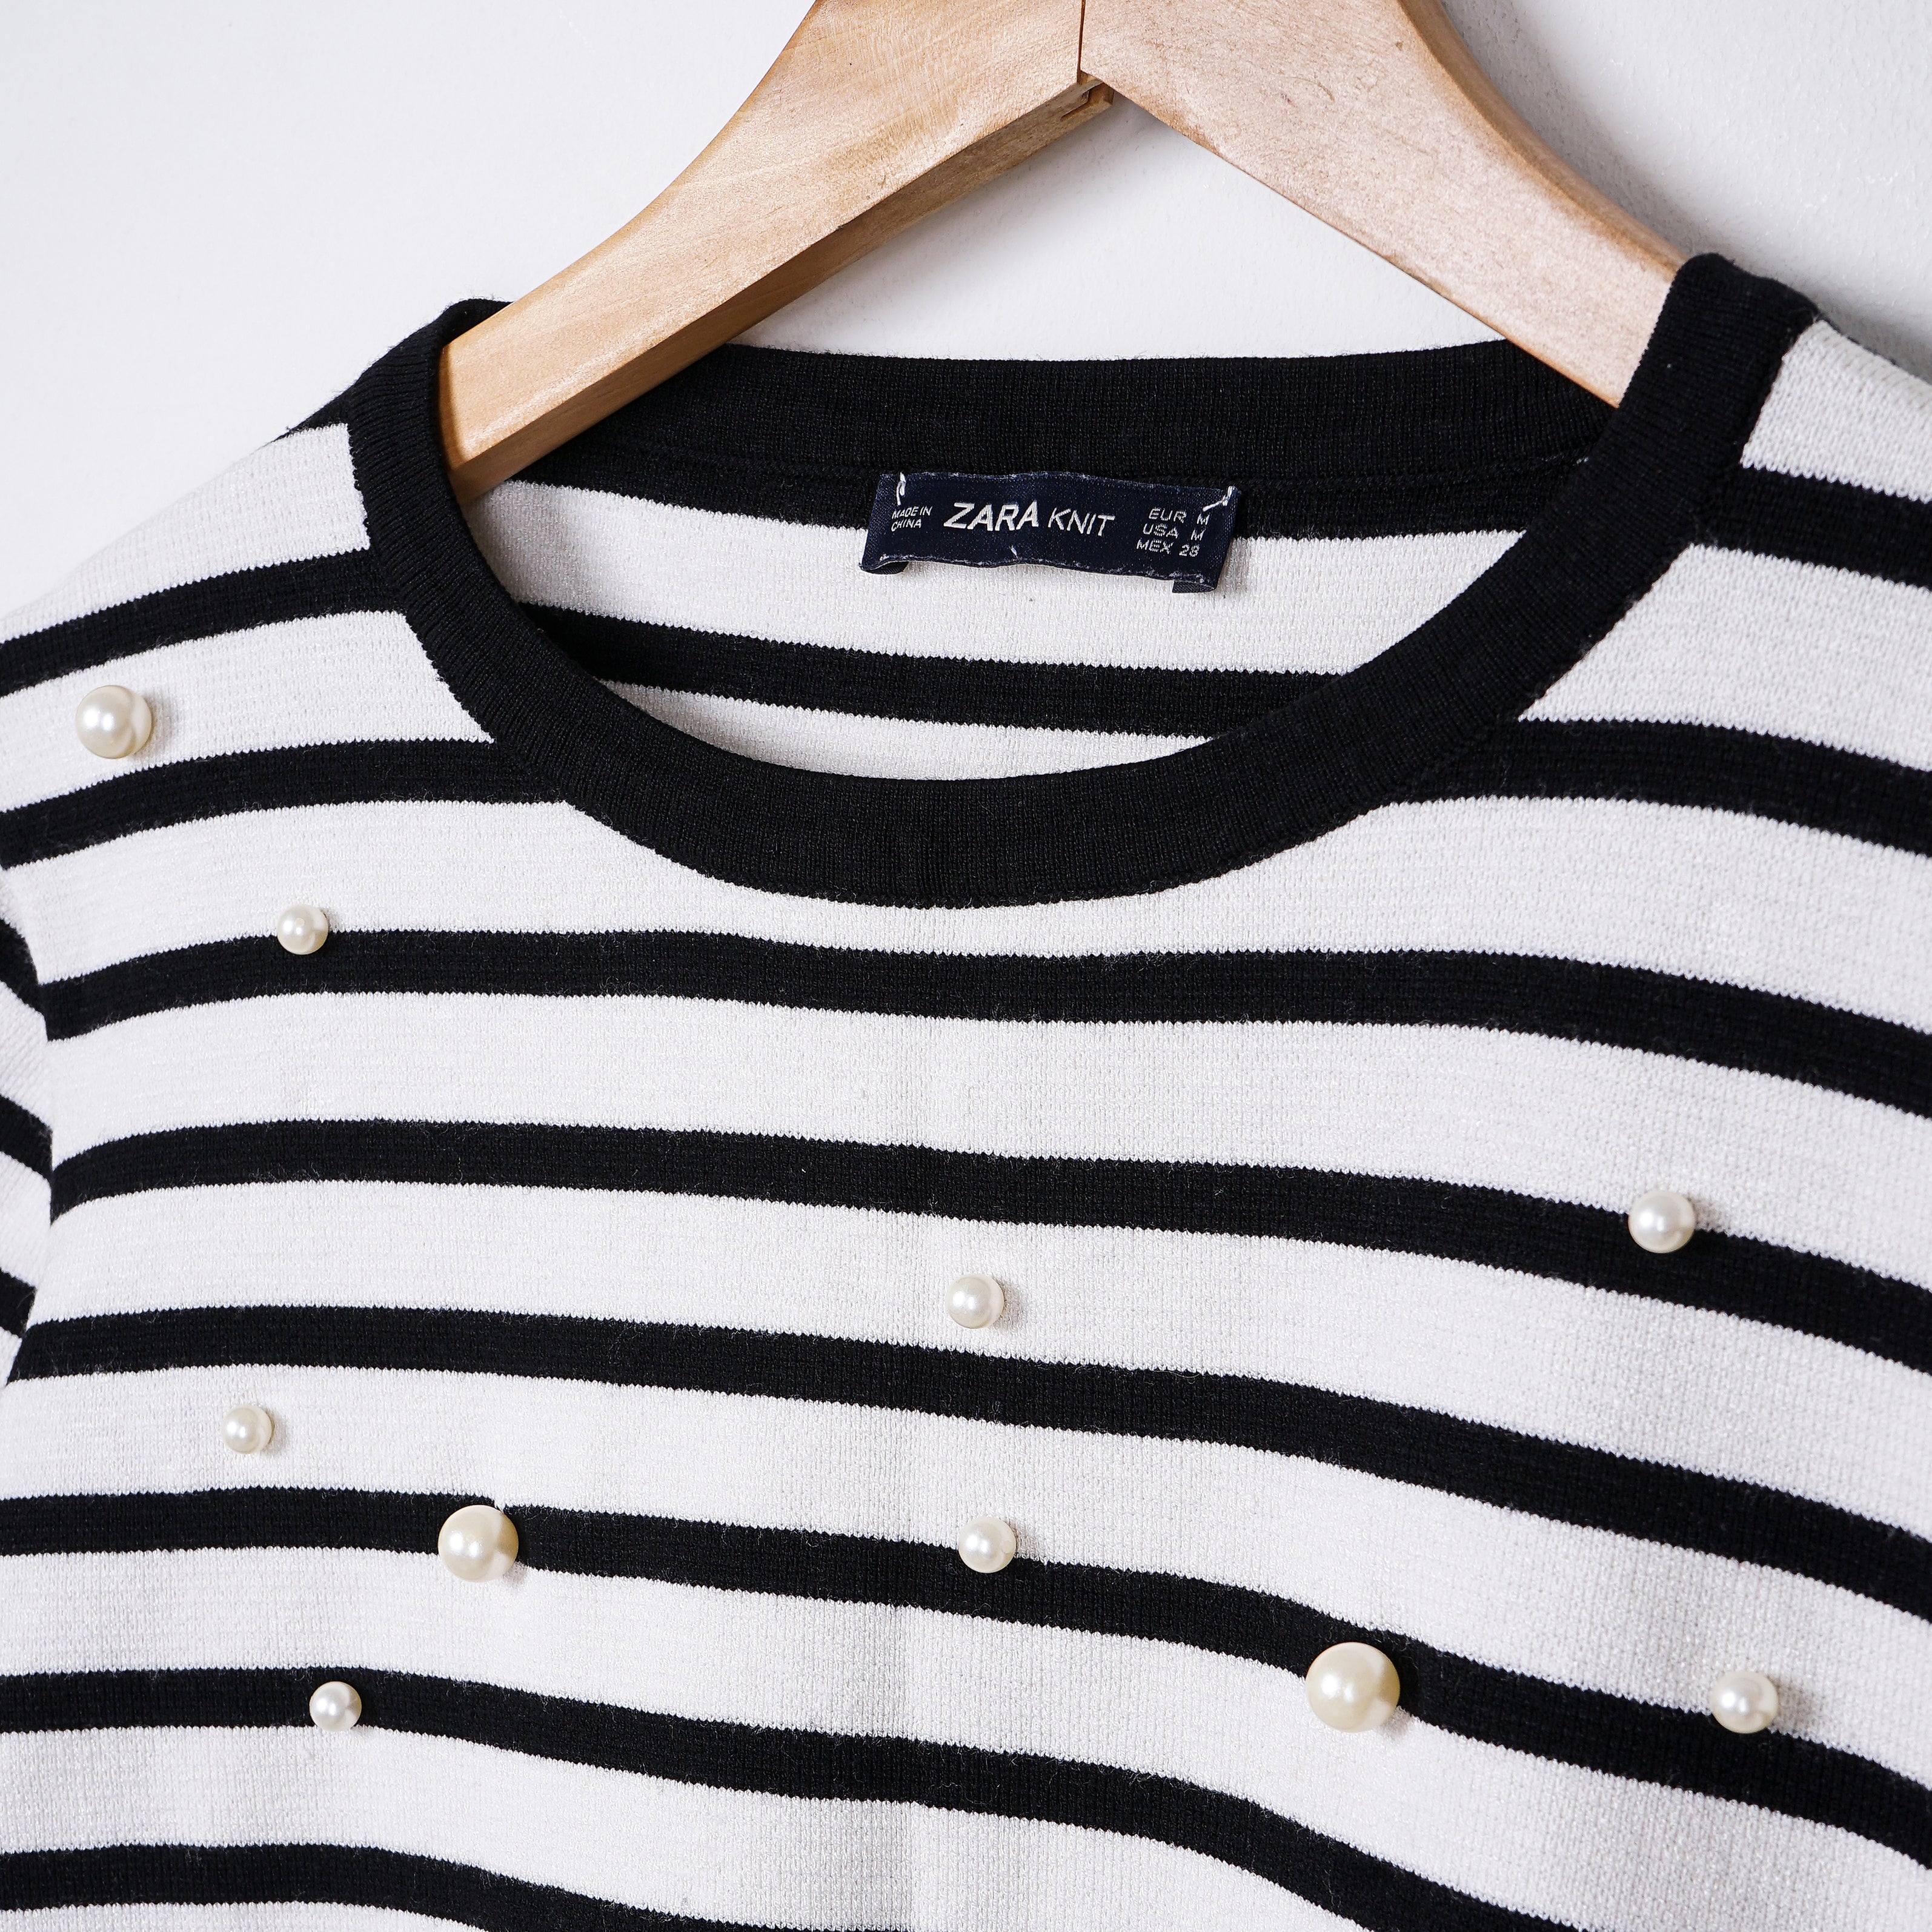 Zara Knit Top Short Sleeves - Marca Deals - Zara